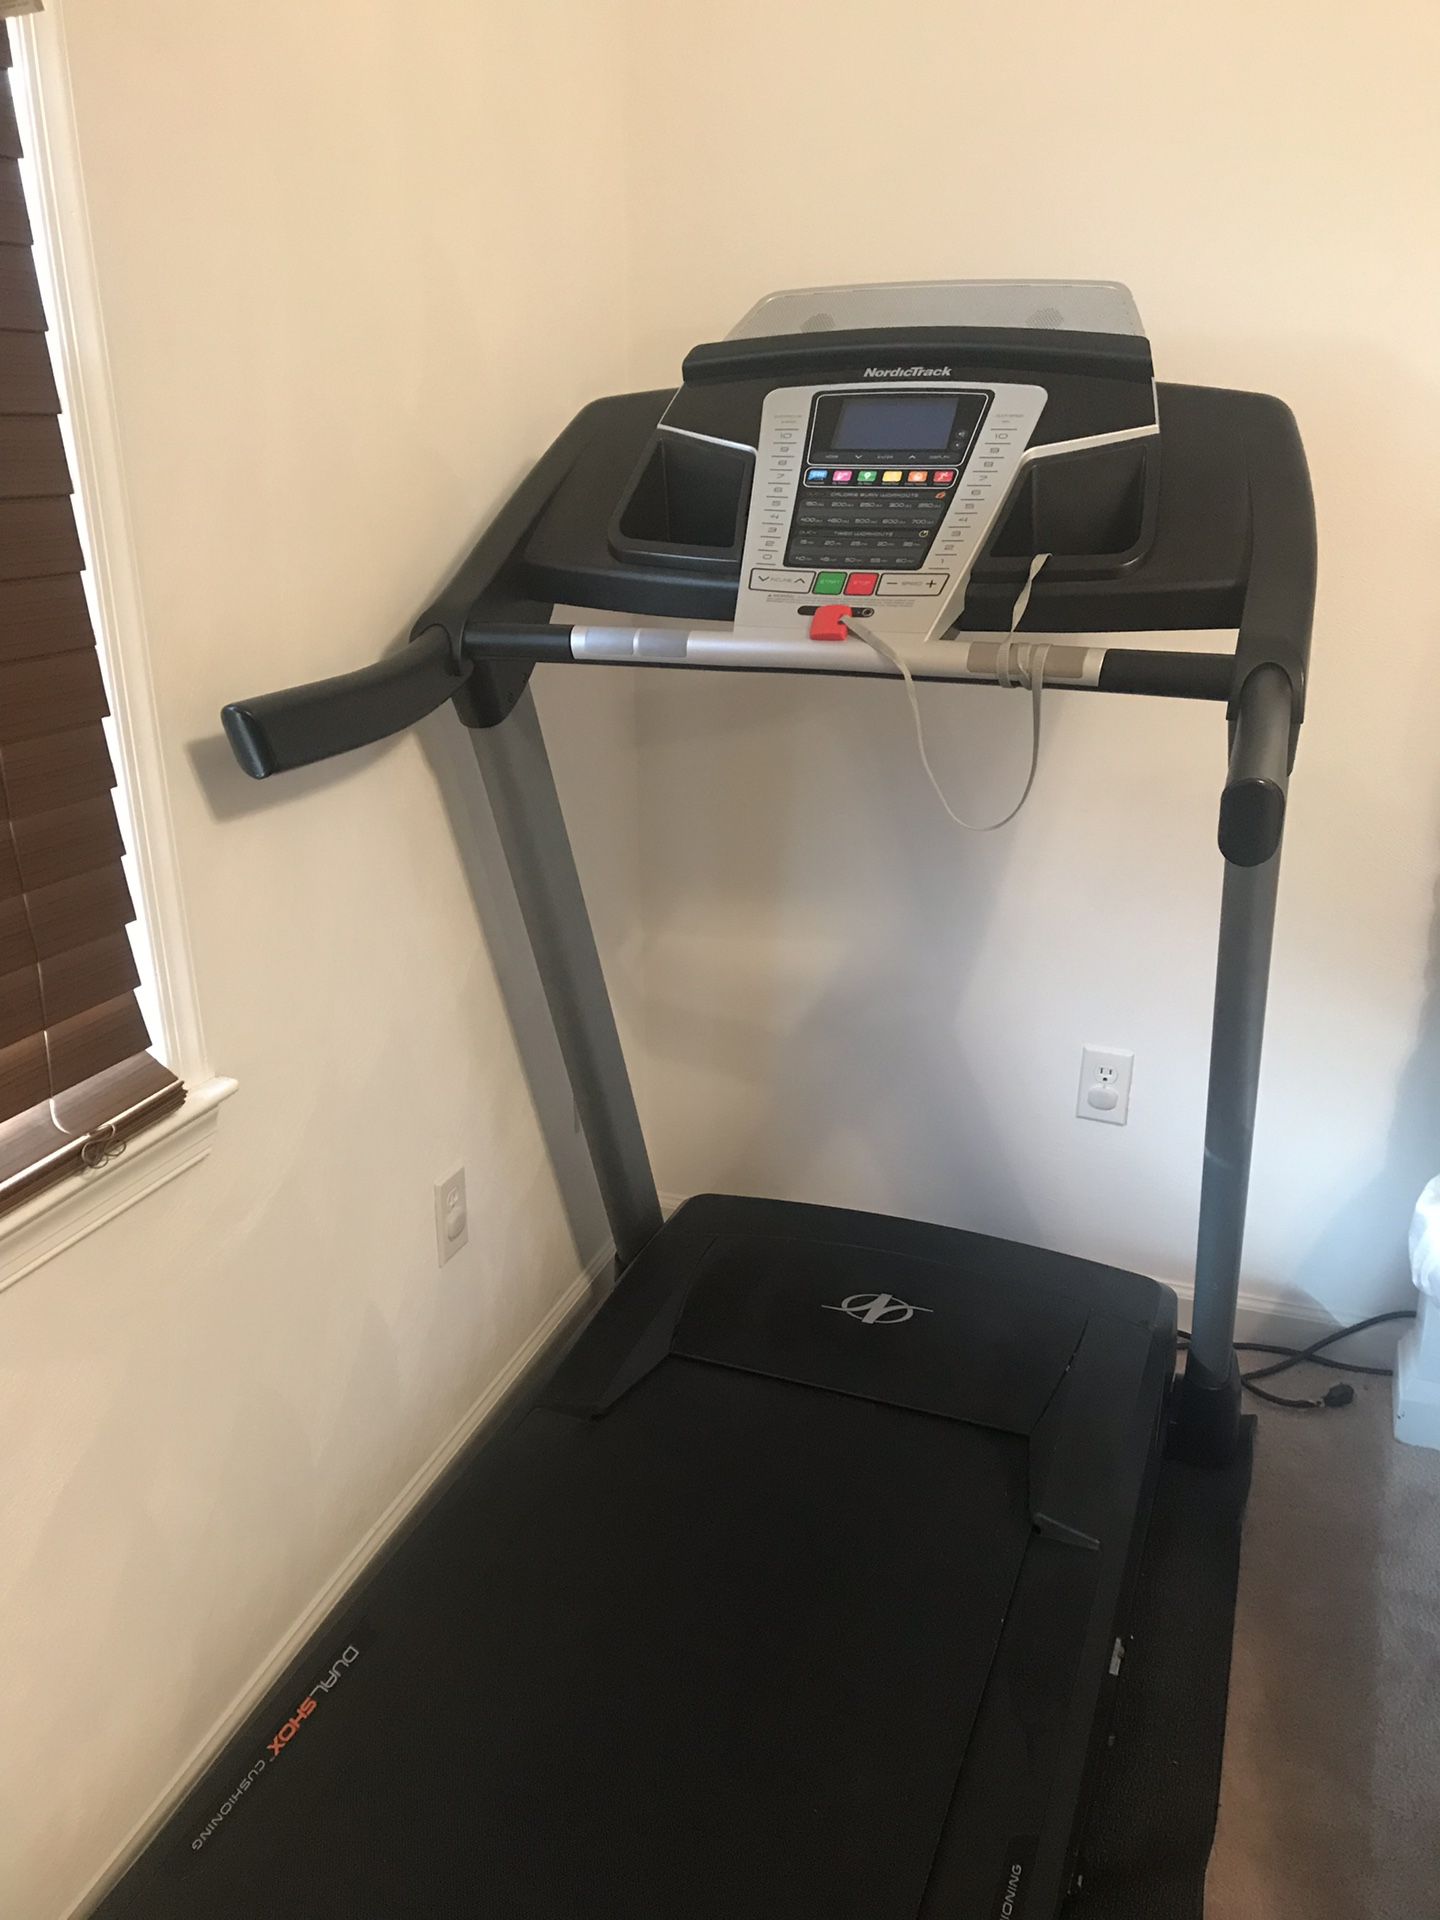 NordicTrack Treadmill for sale $400.00